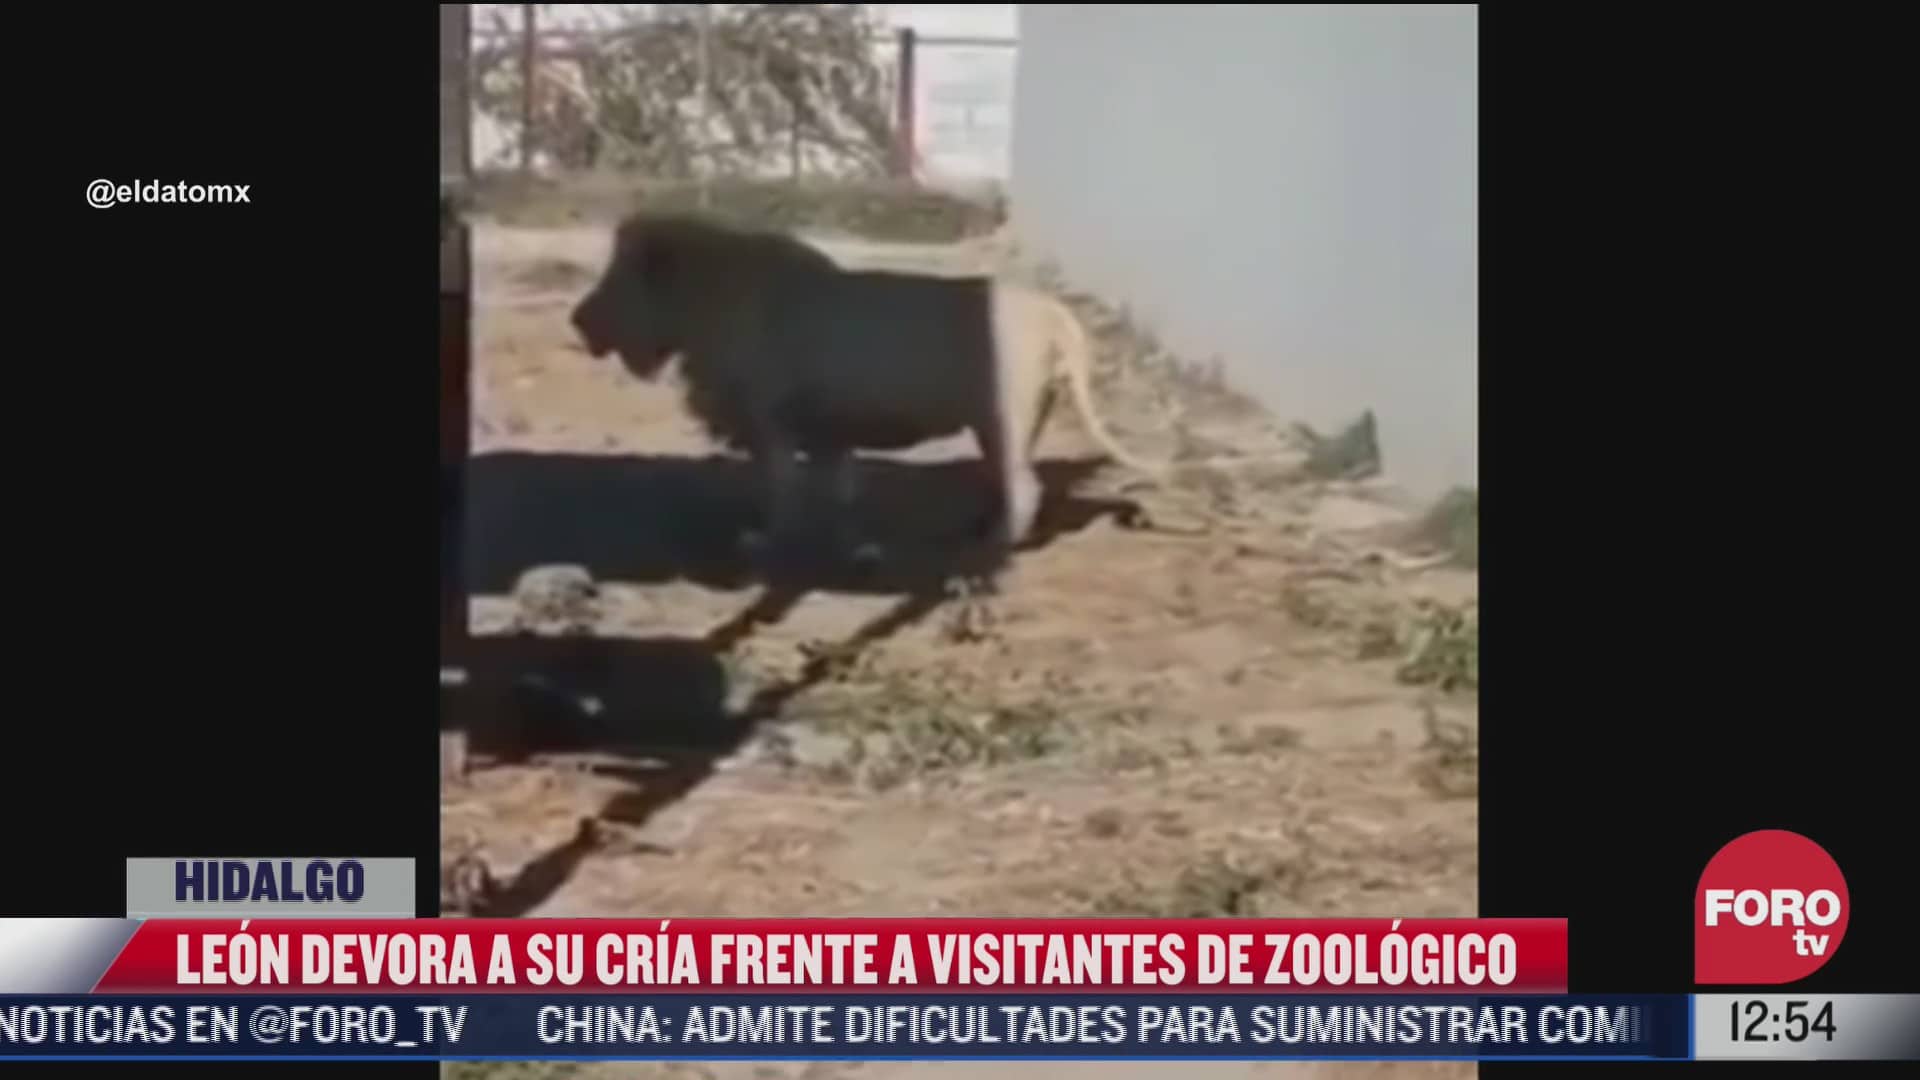 leon devora a su cria frente a visitantes de zoologico